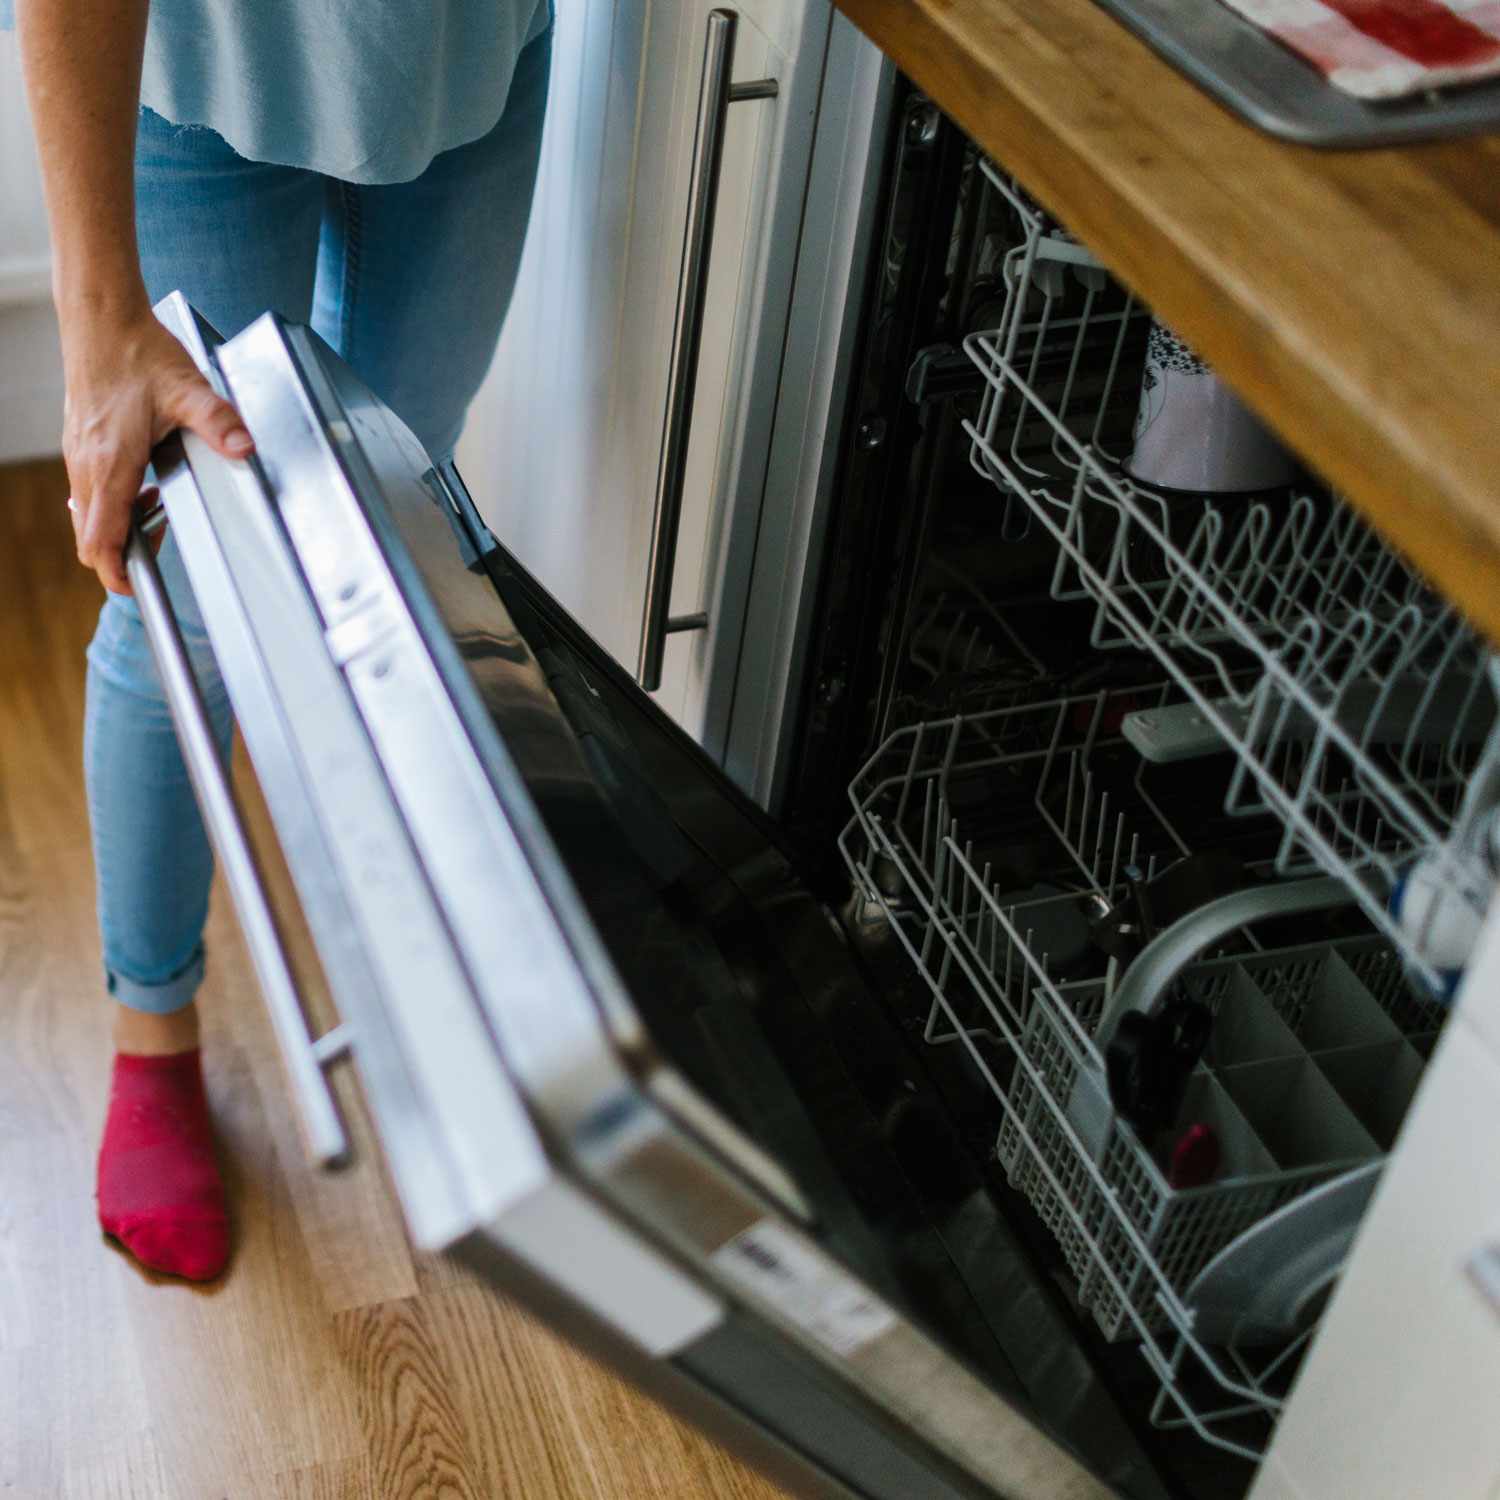 woman opening dishwasher